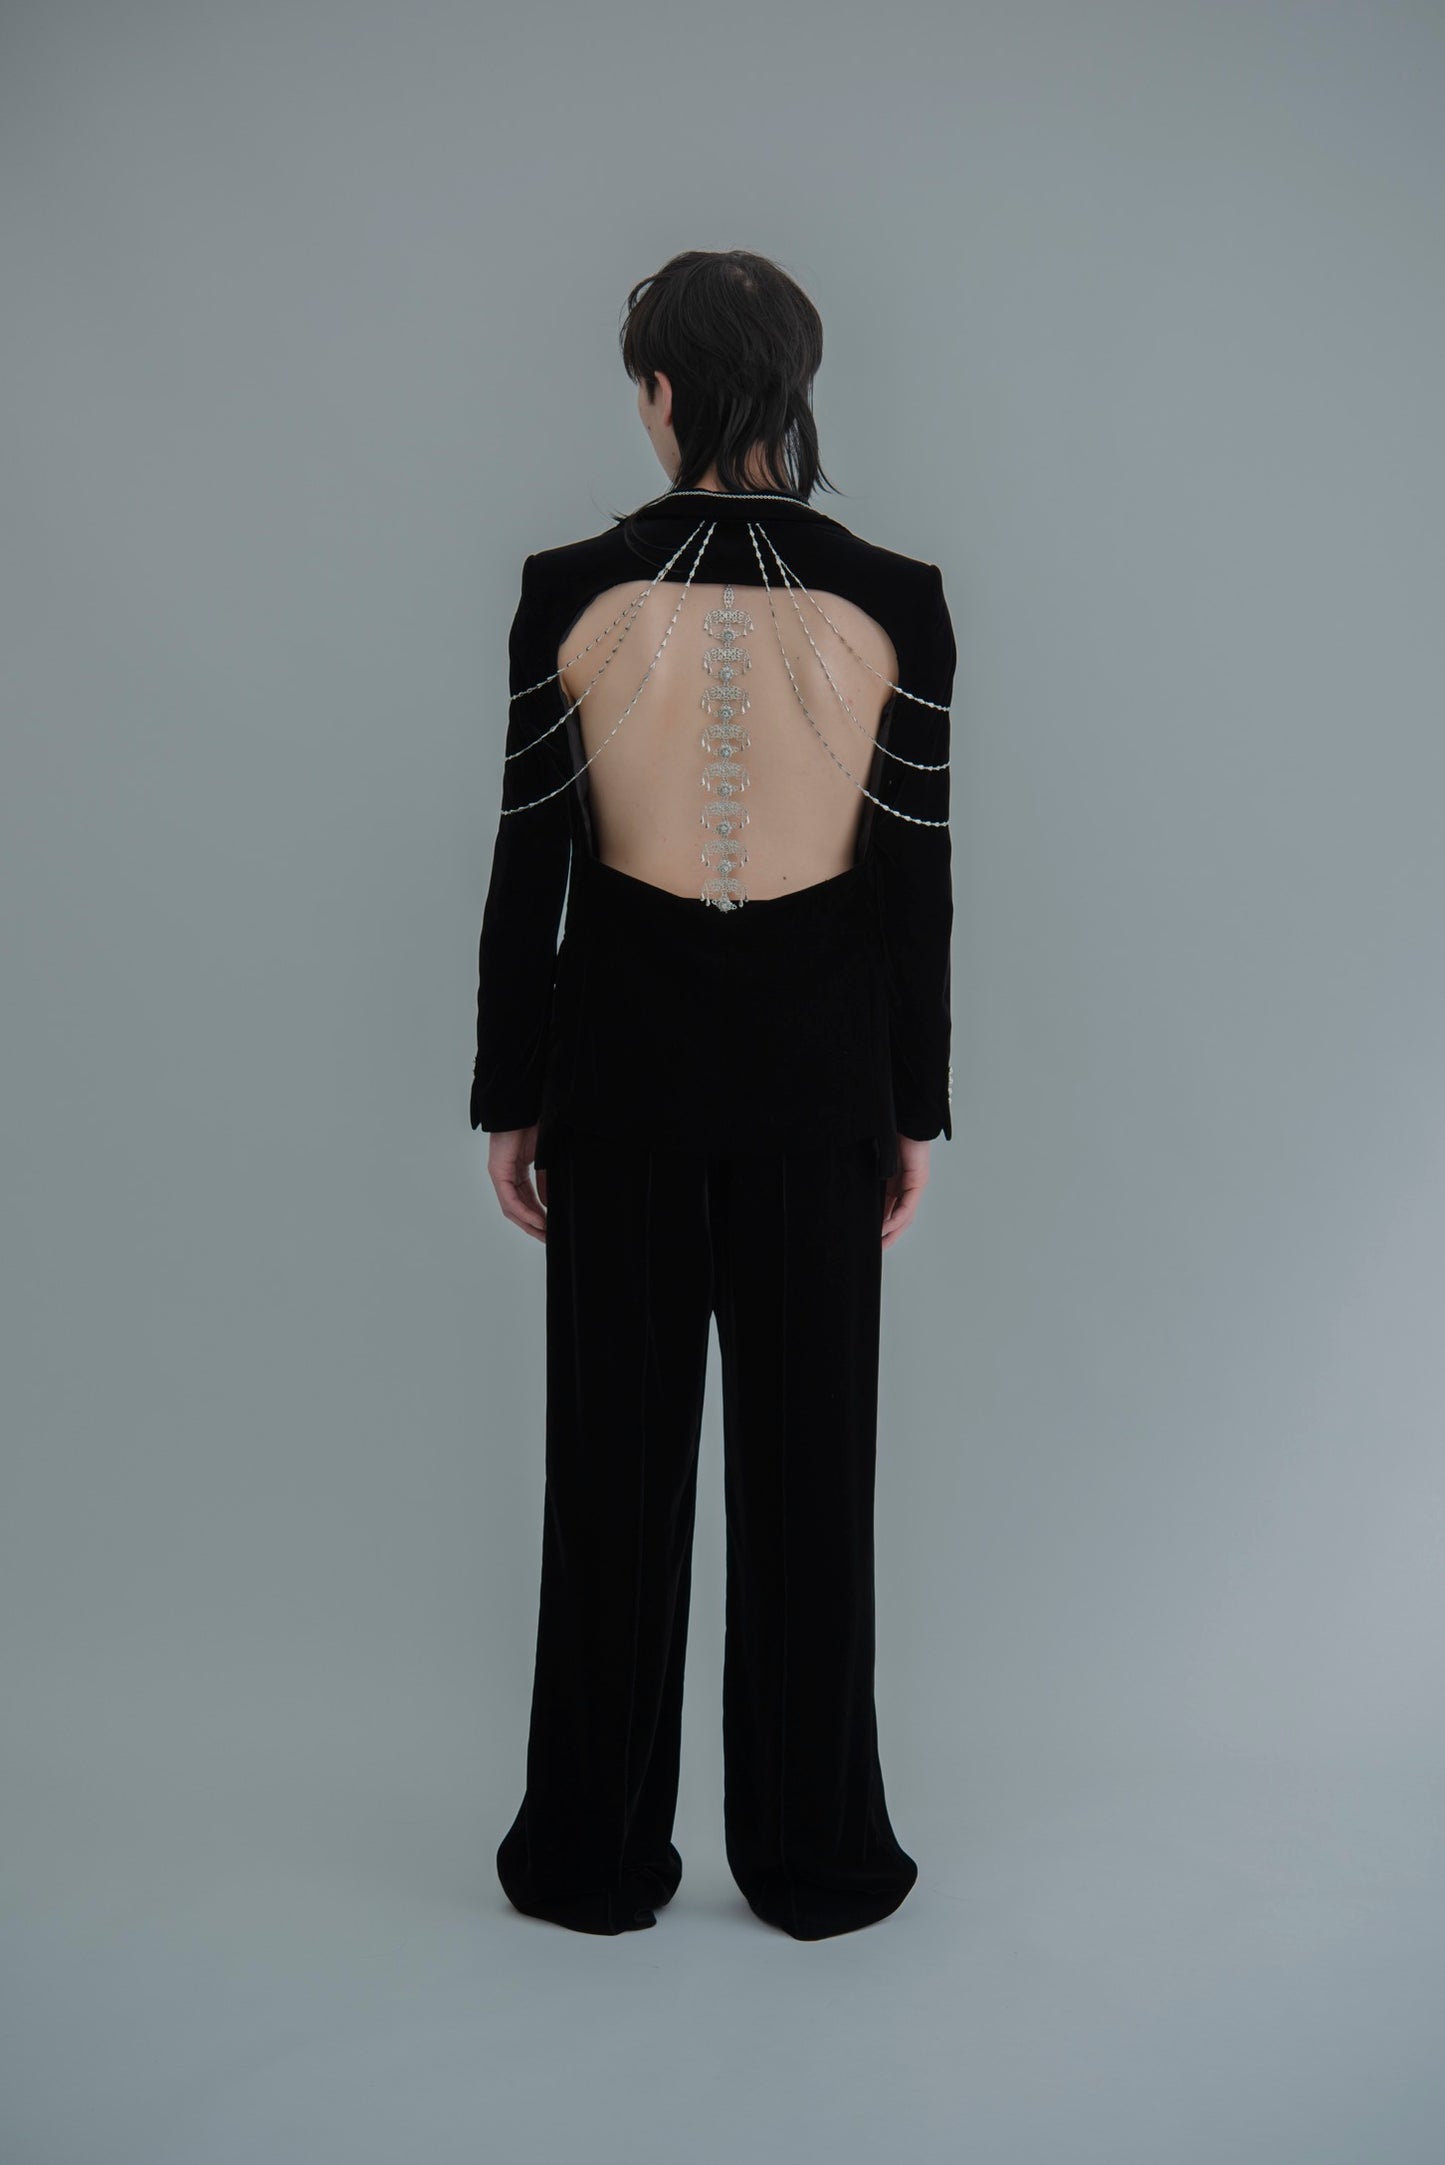 body piercing velvet jacket【Delivery in April 2023】